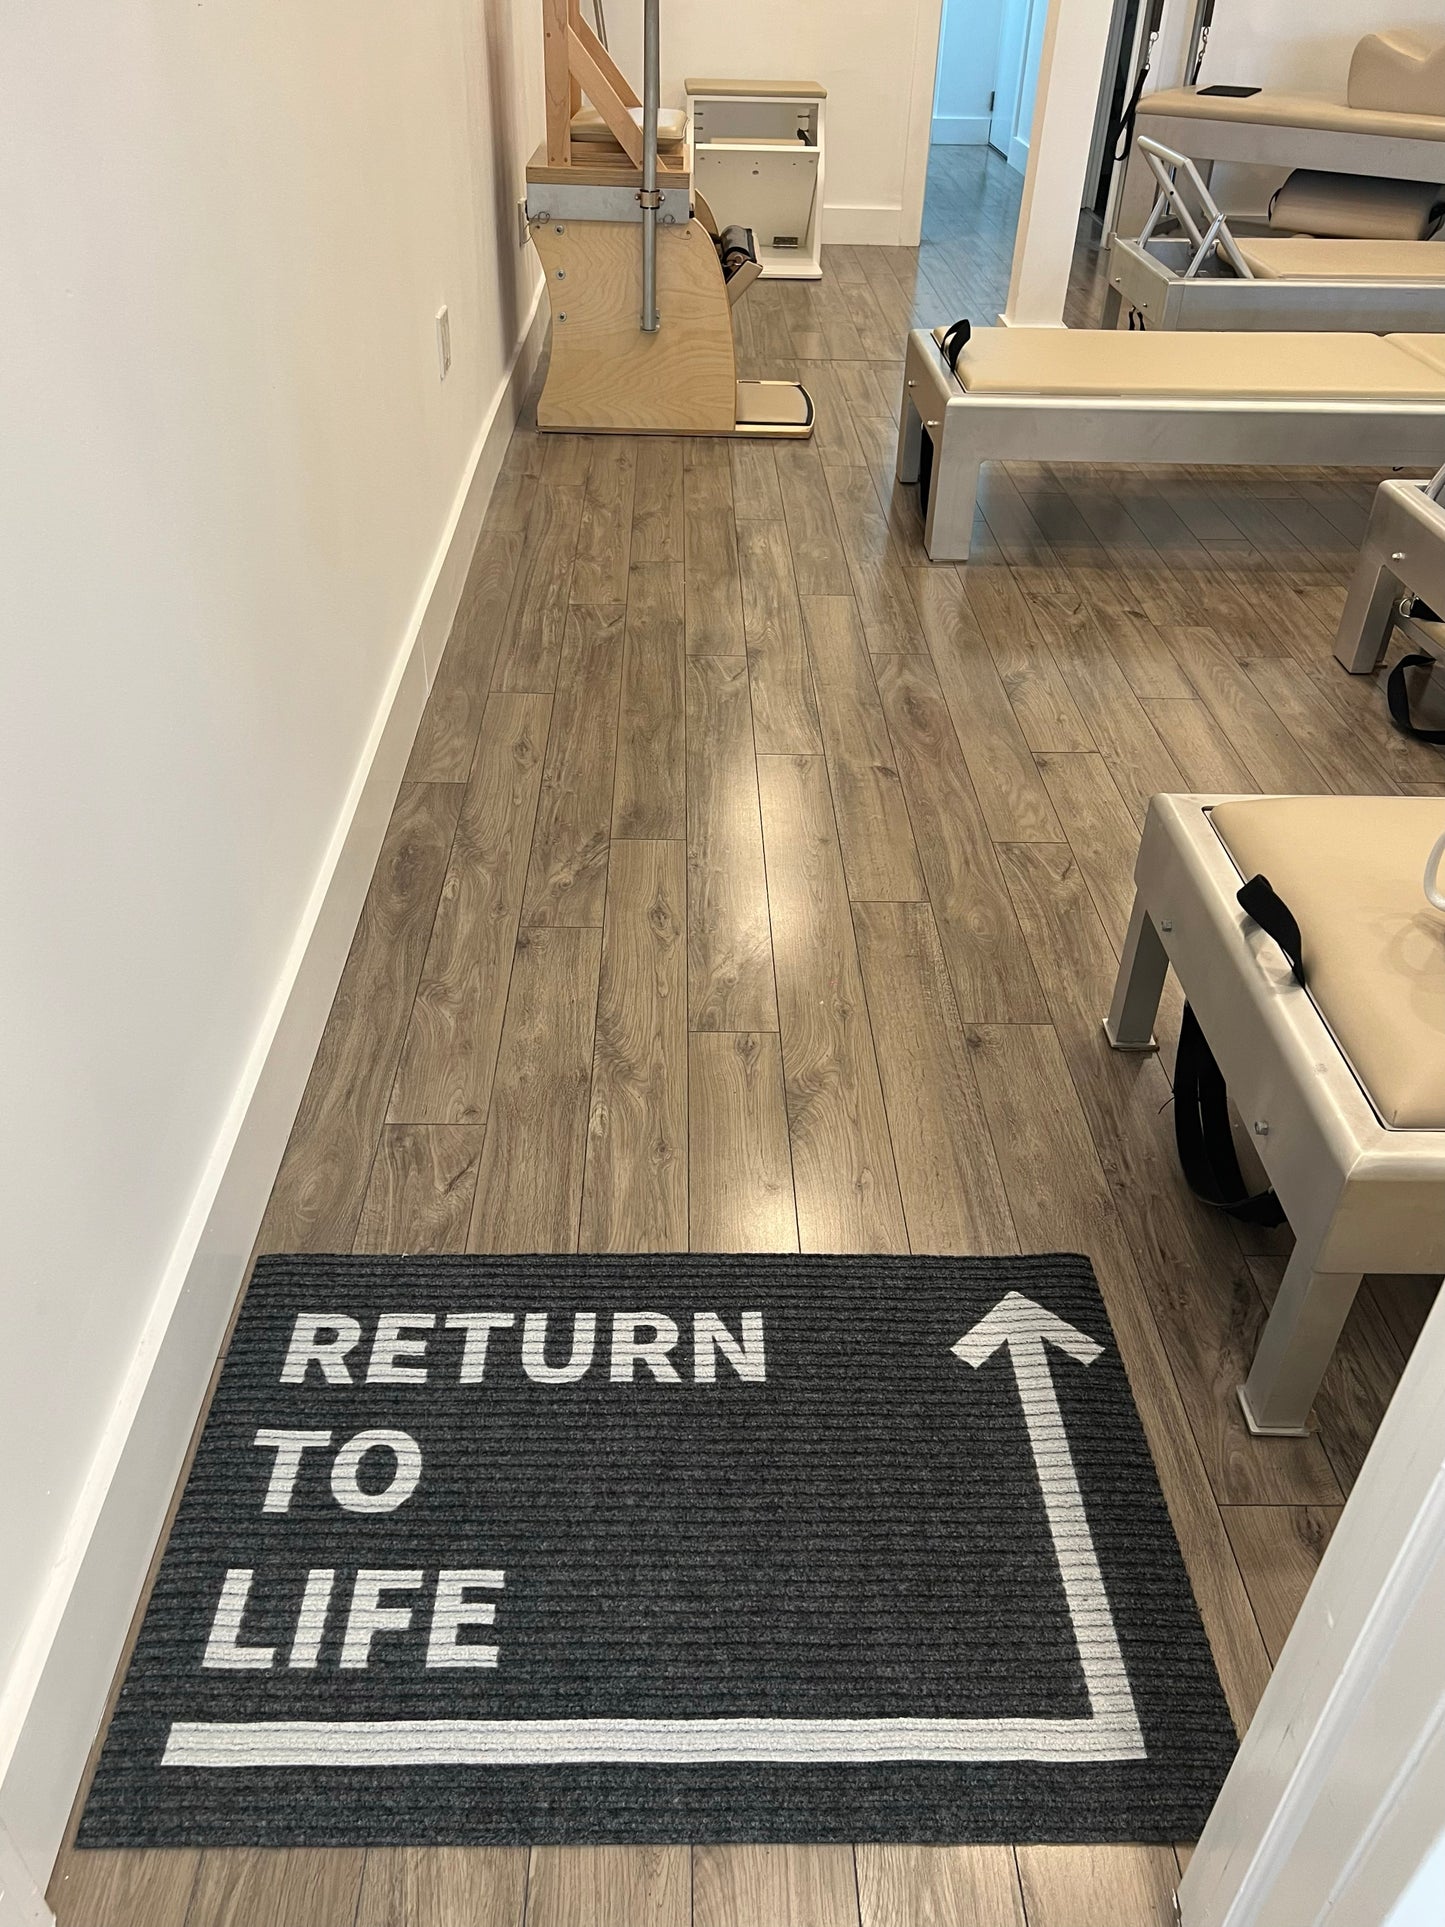 Return To Life - Pilates Door Mat